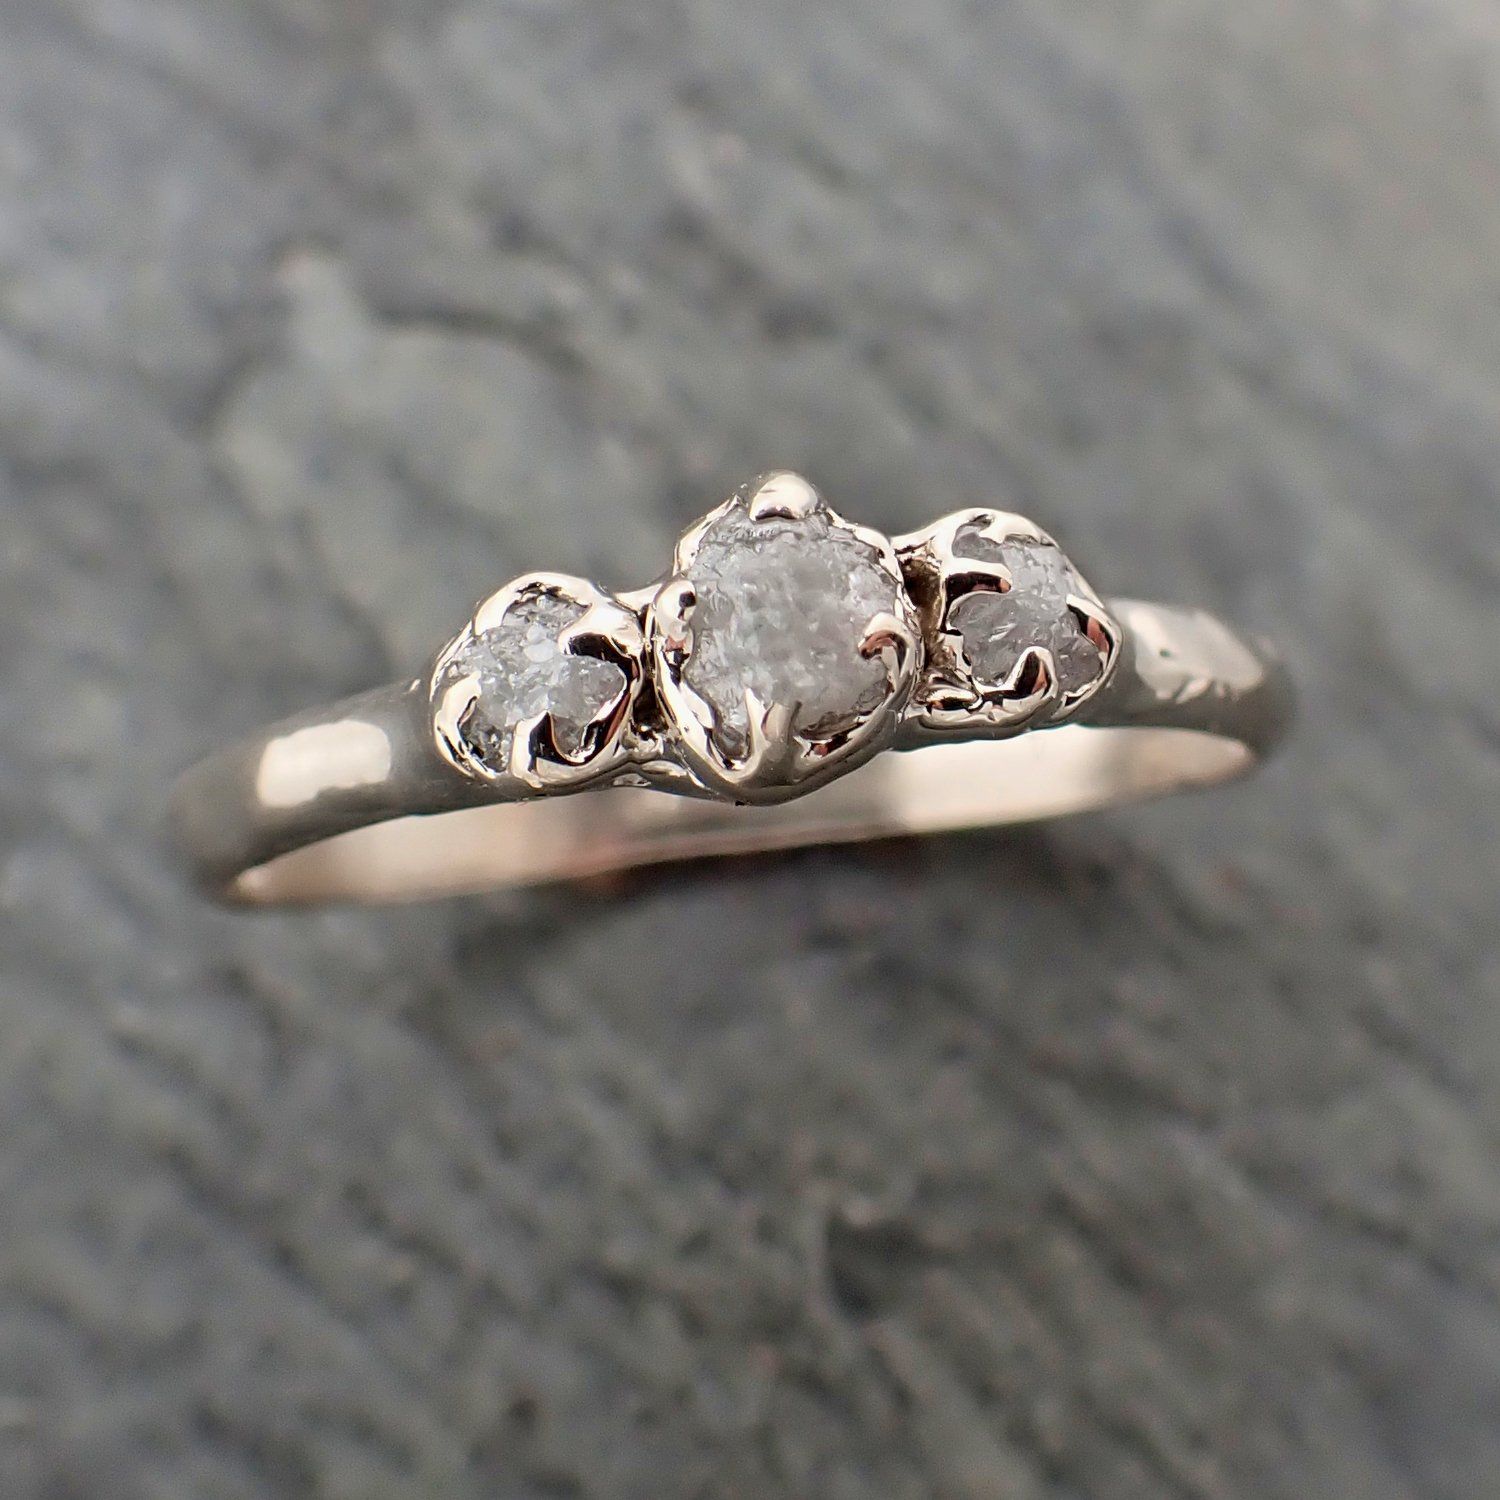 dainty raw rough diamond engagement stacking ring wedding anniversary white gold 14k rustic byangeline 2299 Alternative Engagement